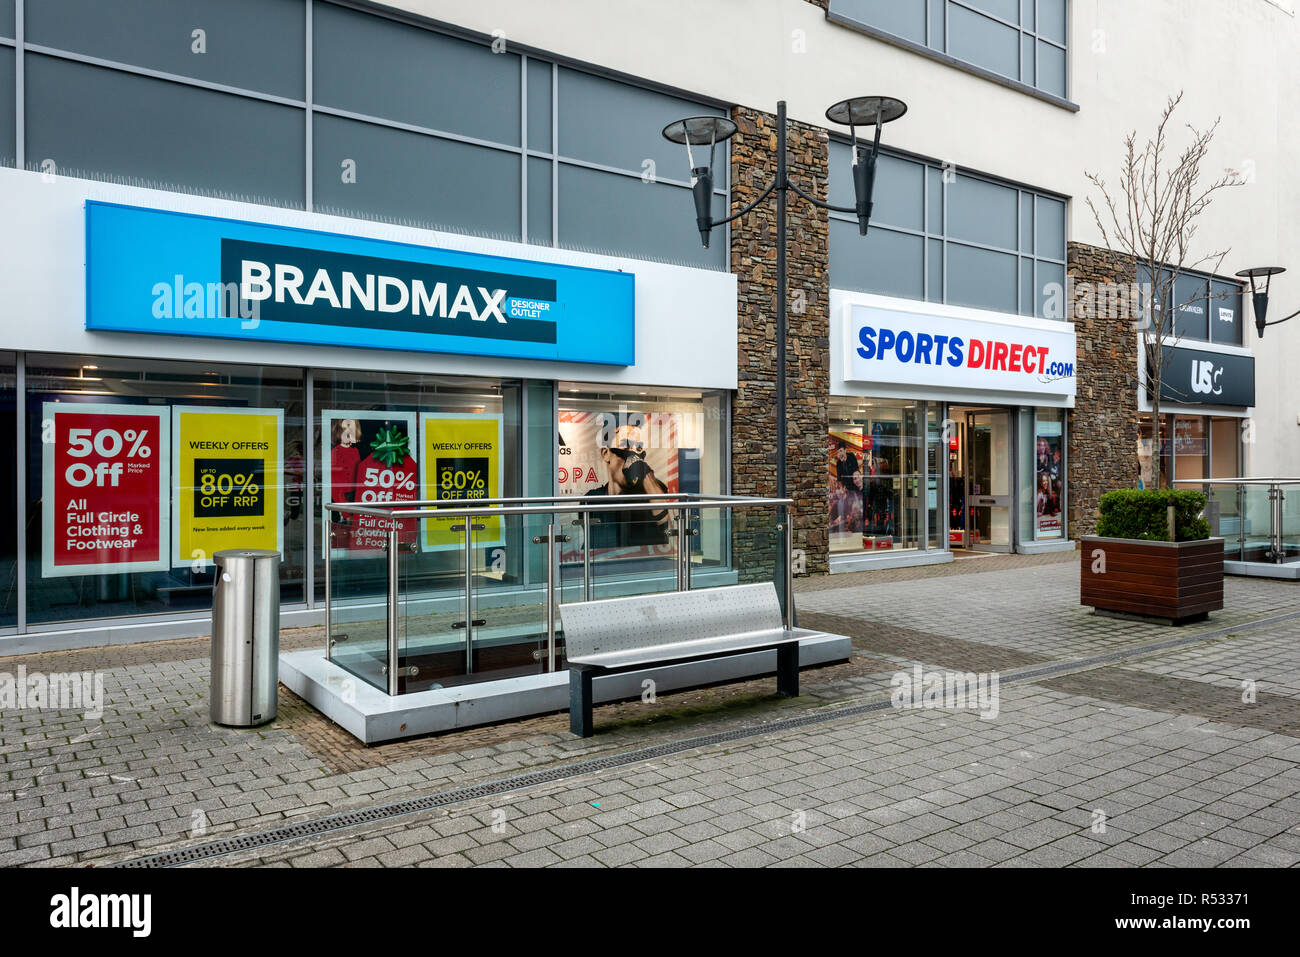 Sports Direct and Brandmax store in Scotts Street, Killarney, County Kerry, Ireland Stock Photo